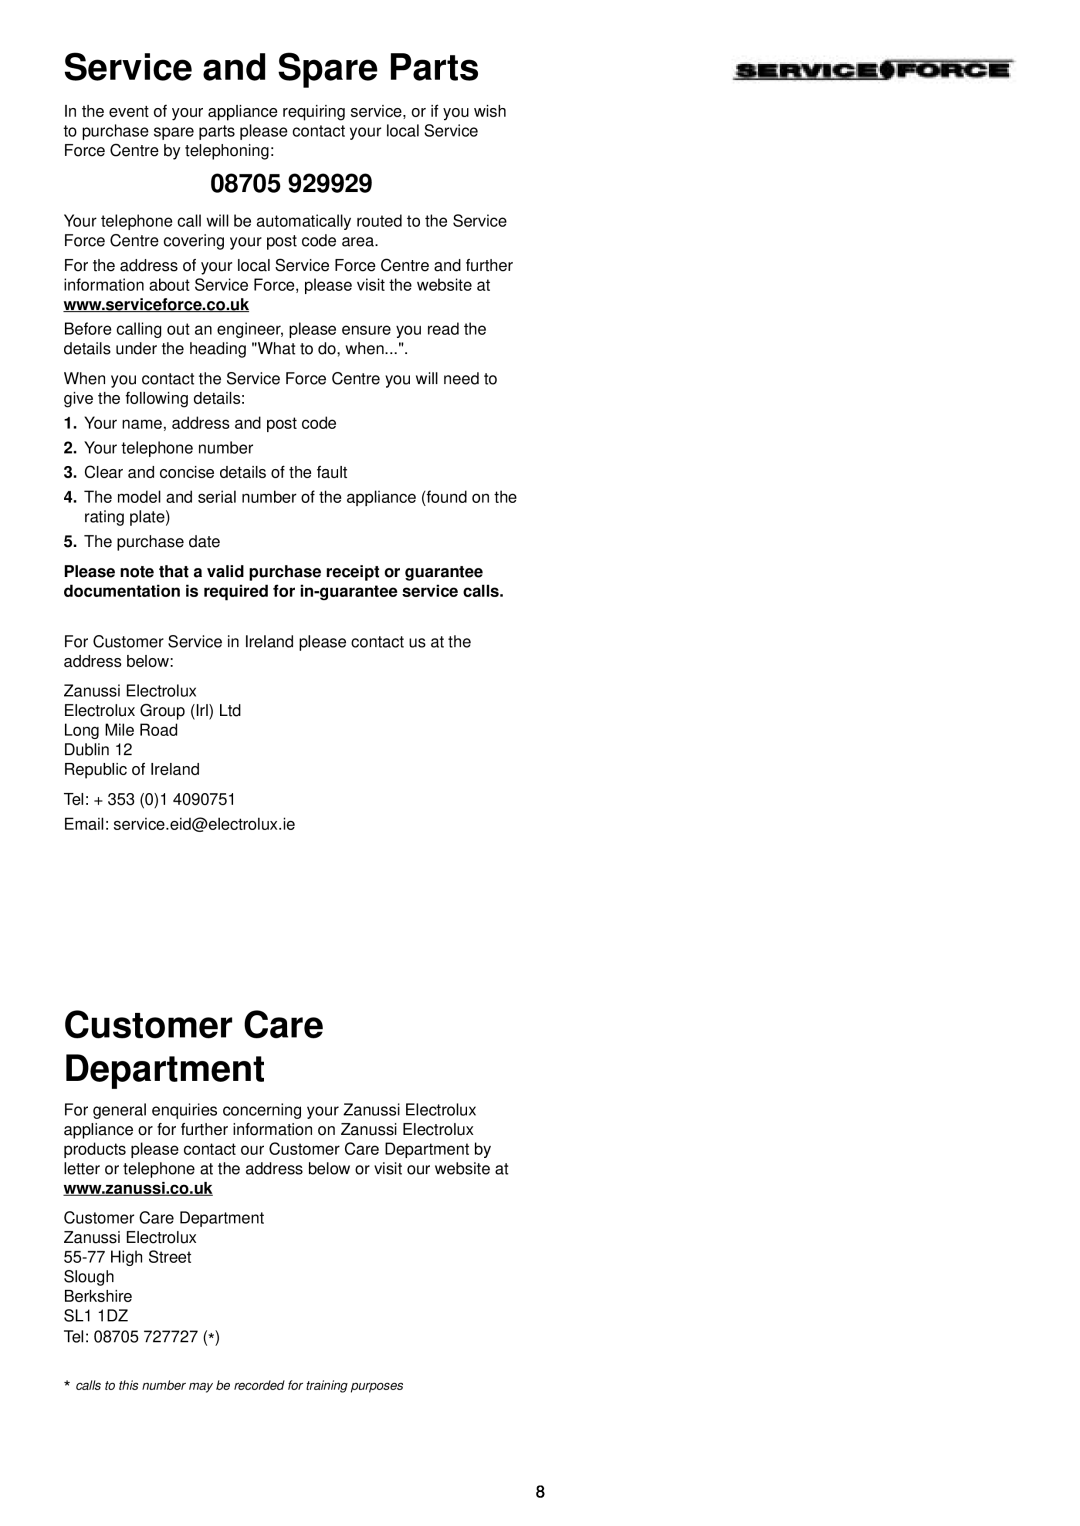 Zanussi DA 6153 manual Service and Spare Parts, Customer Care Department, 08705 